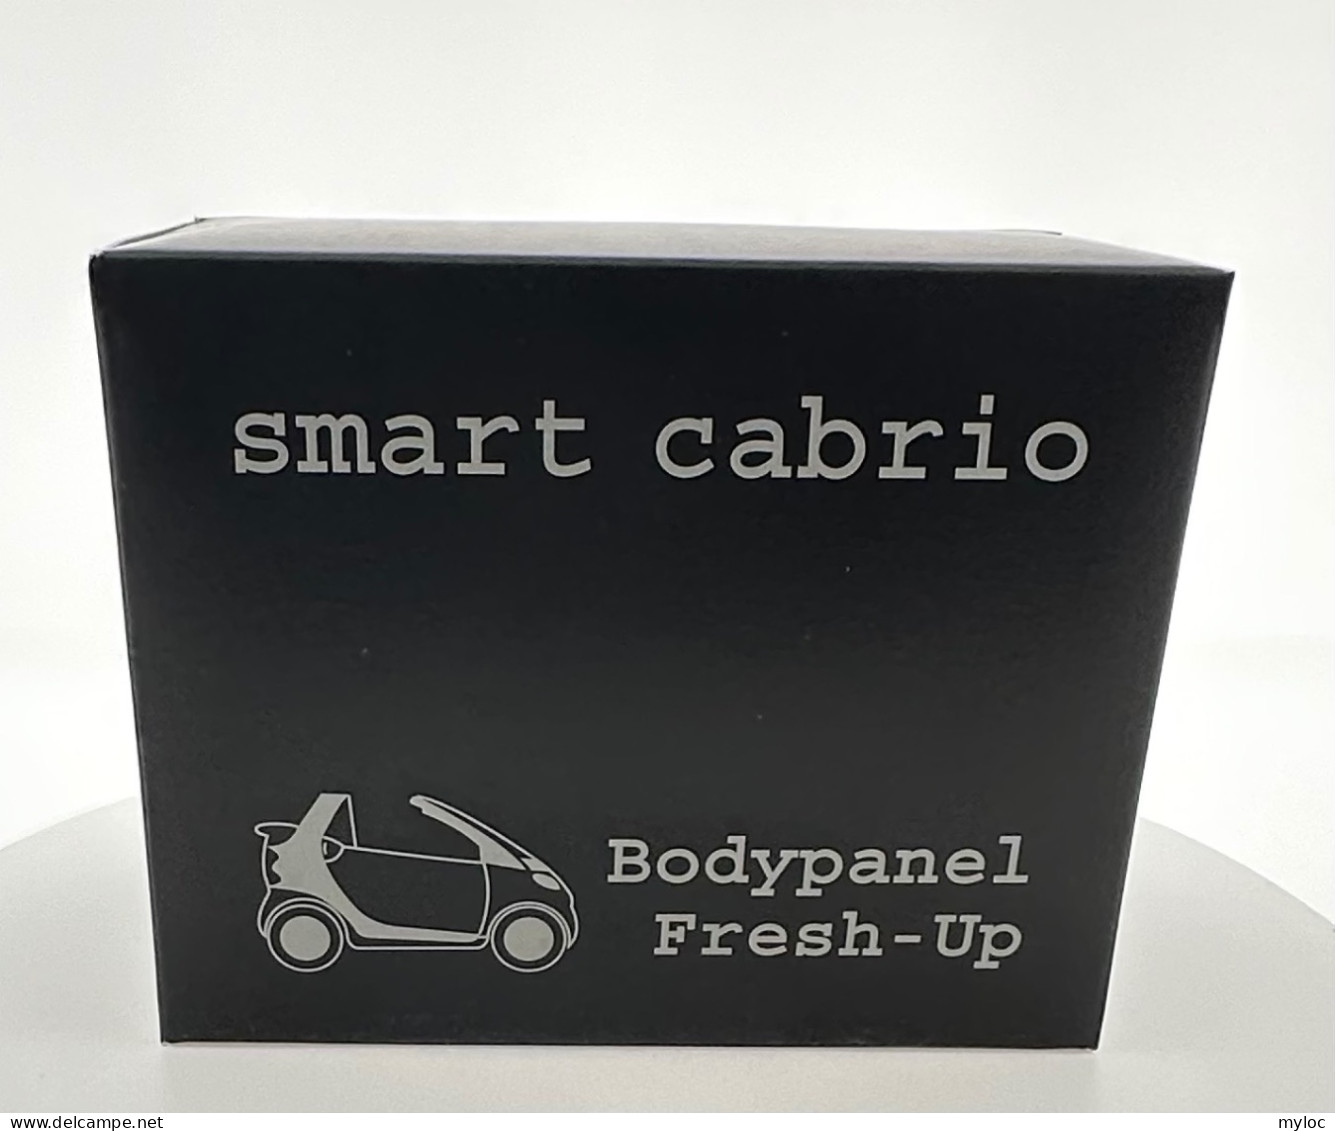 Smart. Smartware. Smart Cabrio star blue metallic & body panel fresh-up jack black.